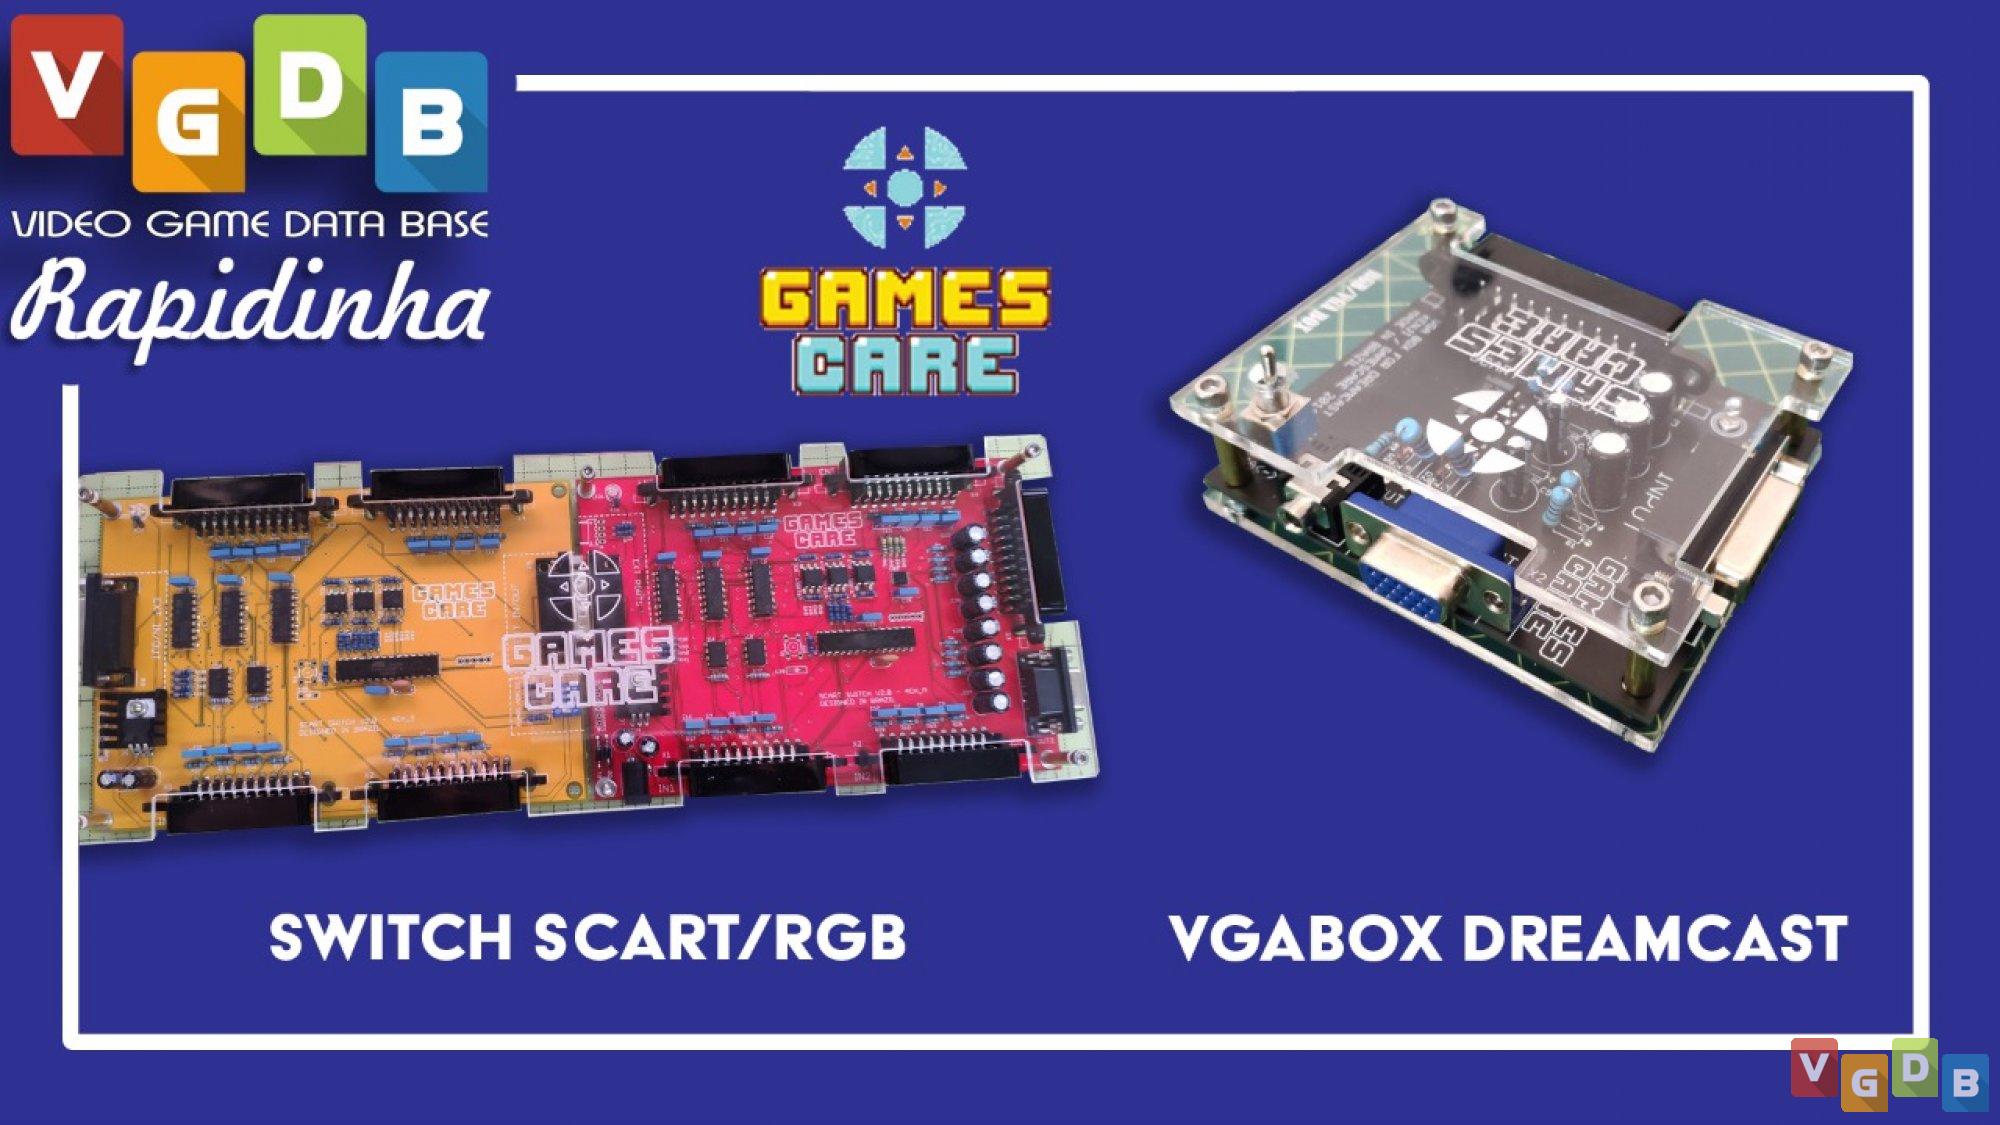 VGDB - Vídeo Game Data Base - Switch Scart e VGA Box SEGA Dreamcast -  Gamescare - Rapidinha VGDB